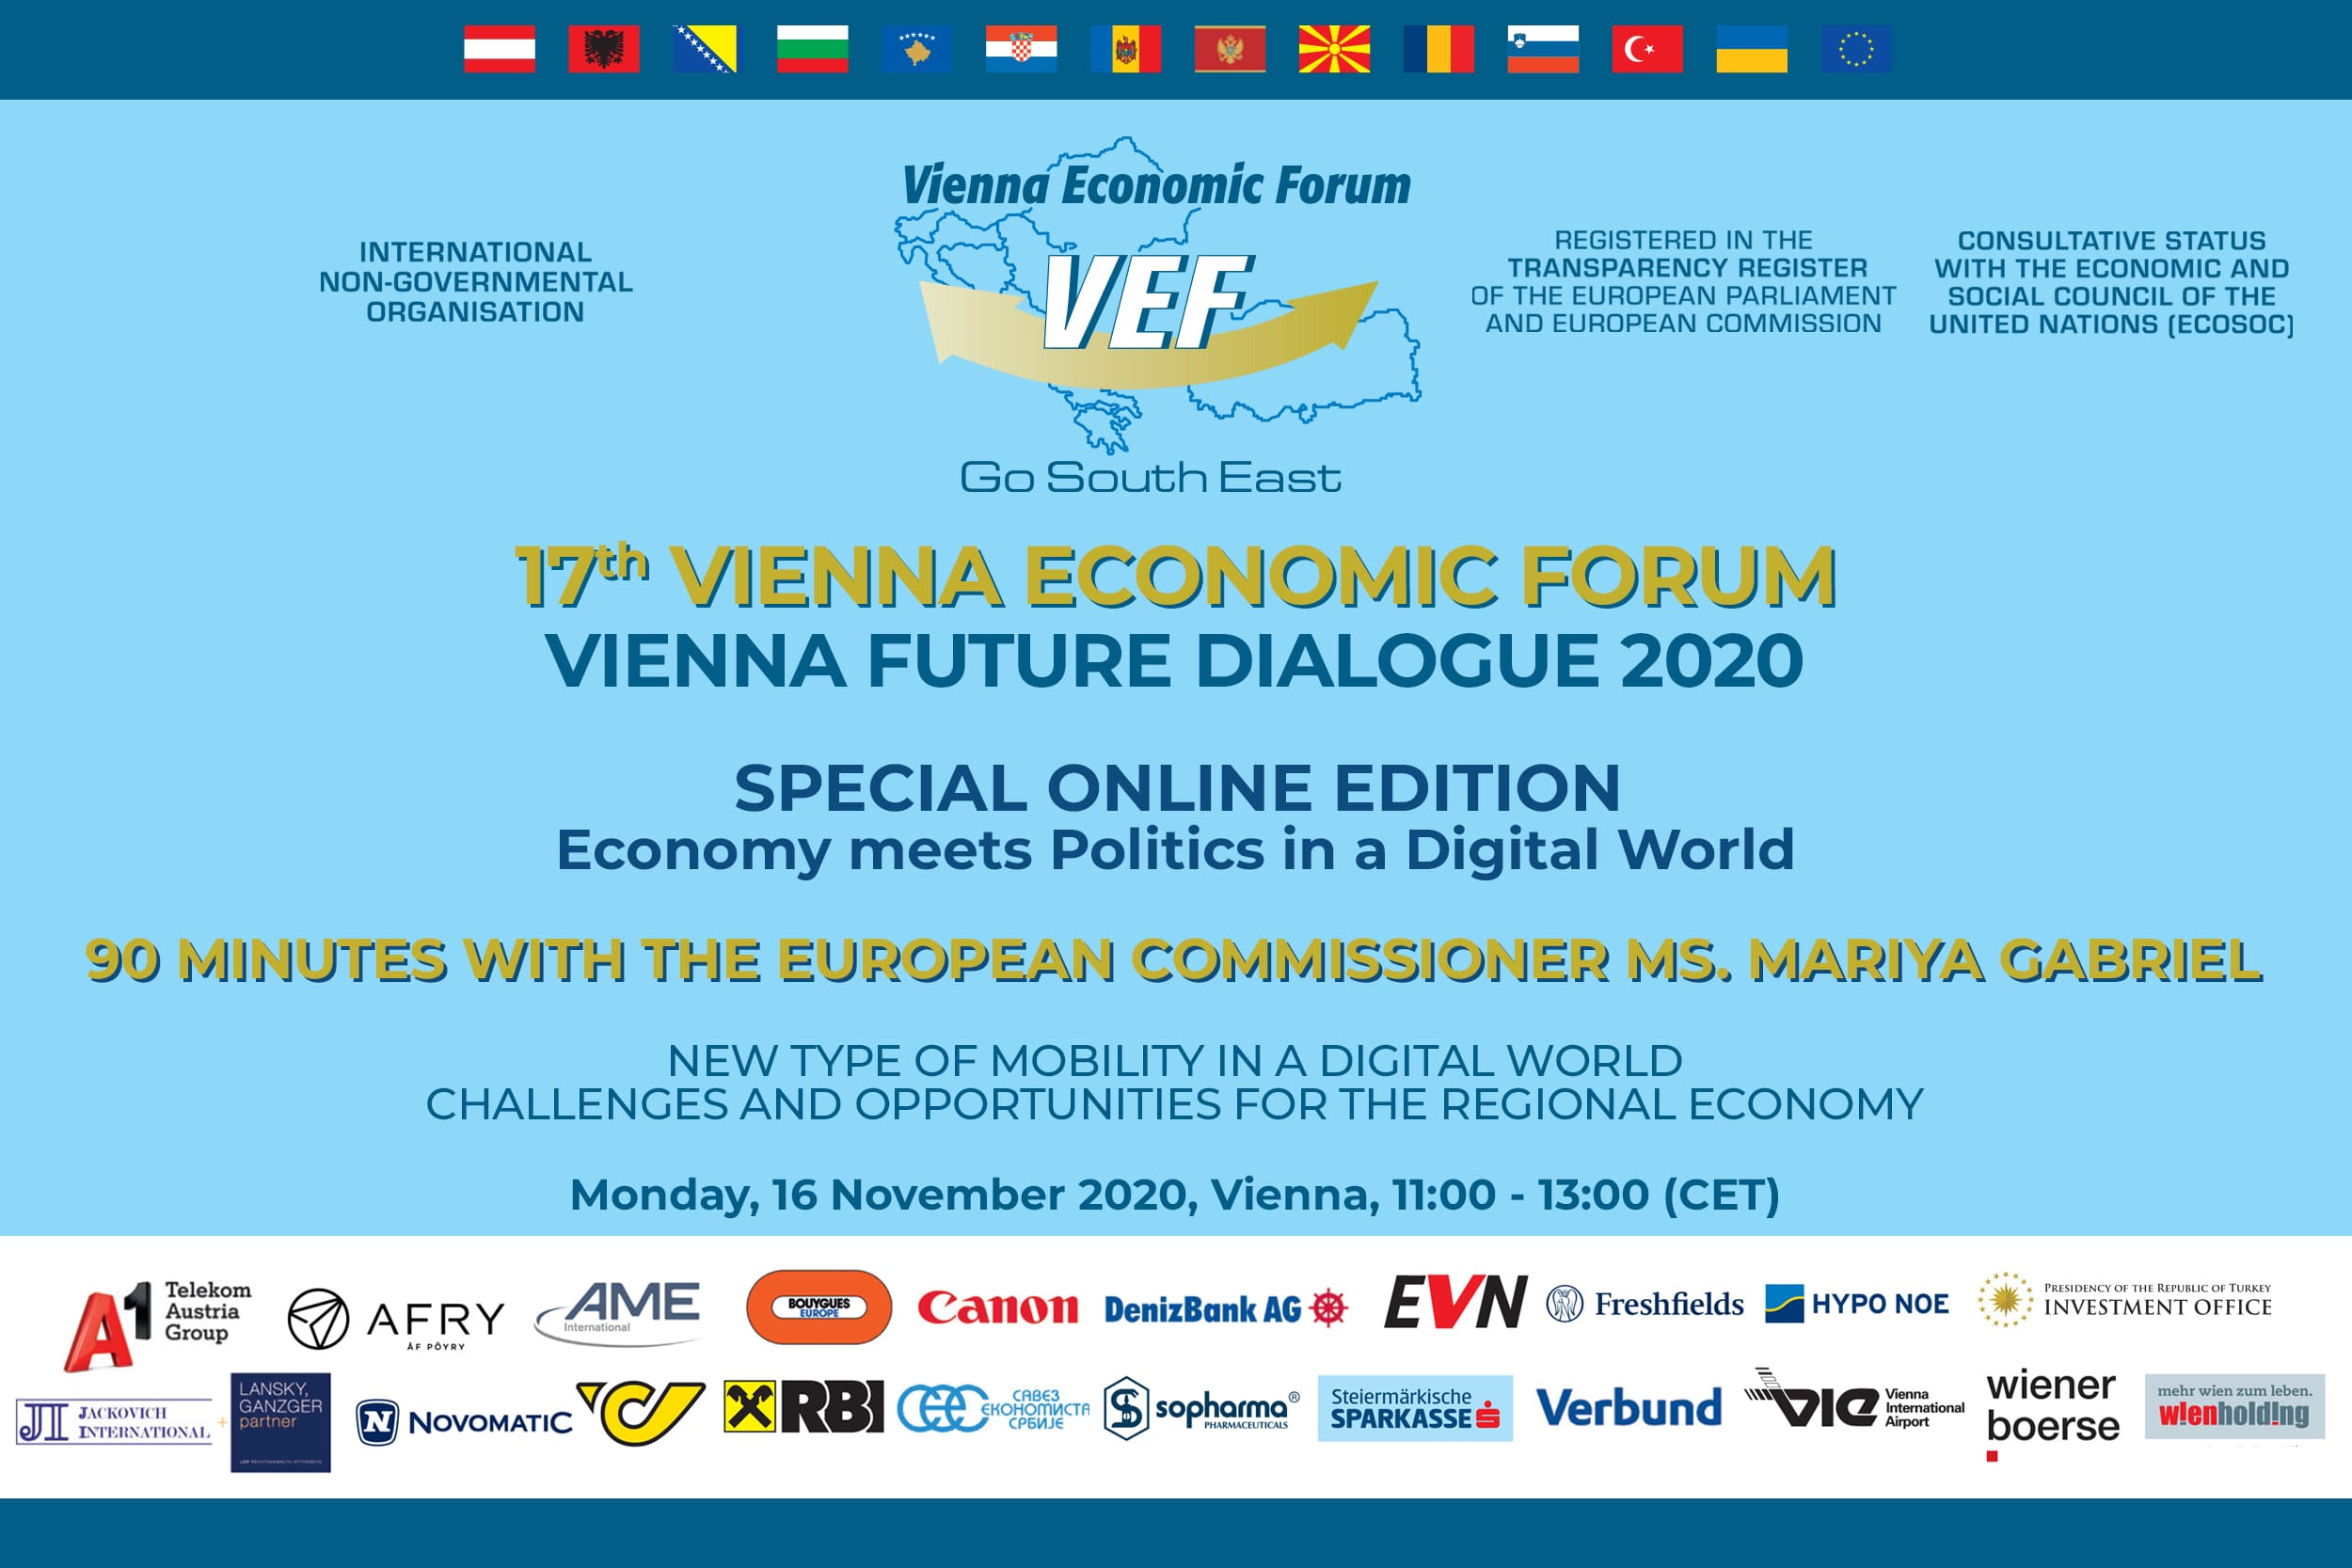 17th Vienna Economic Forum web banner 2500x1667pix